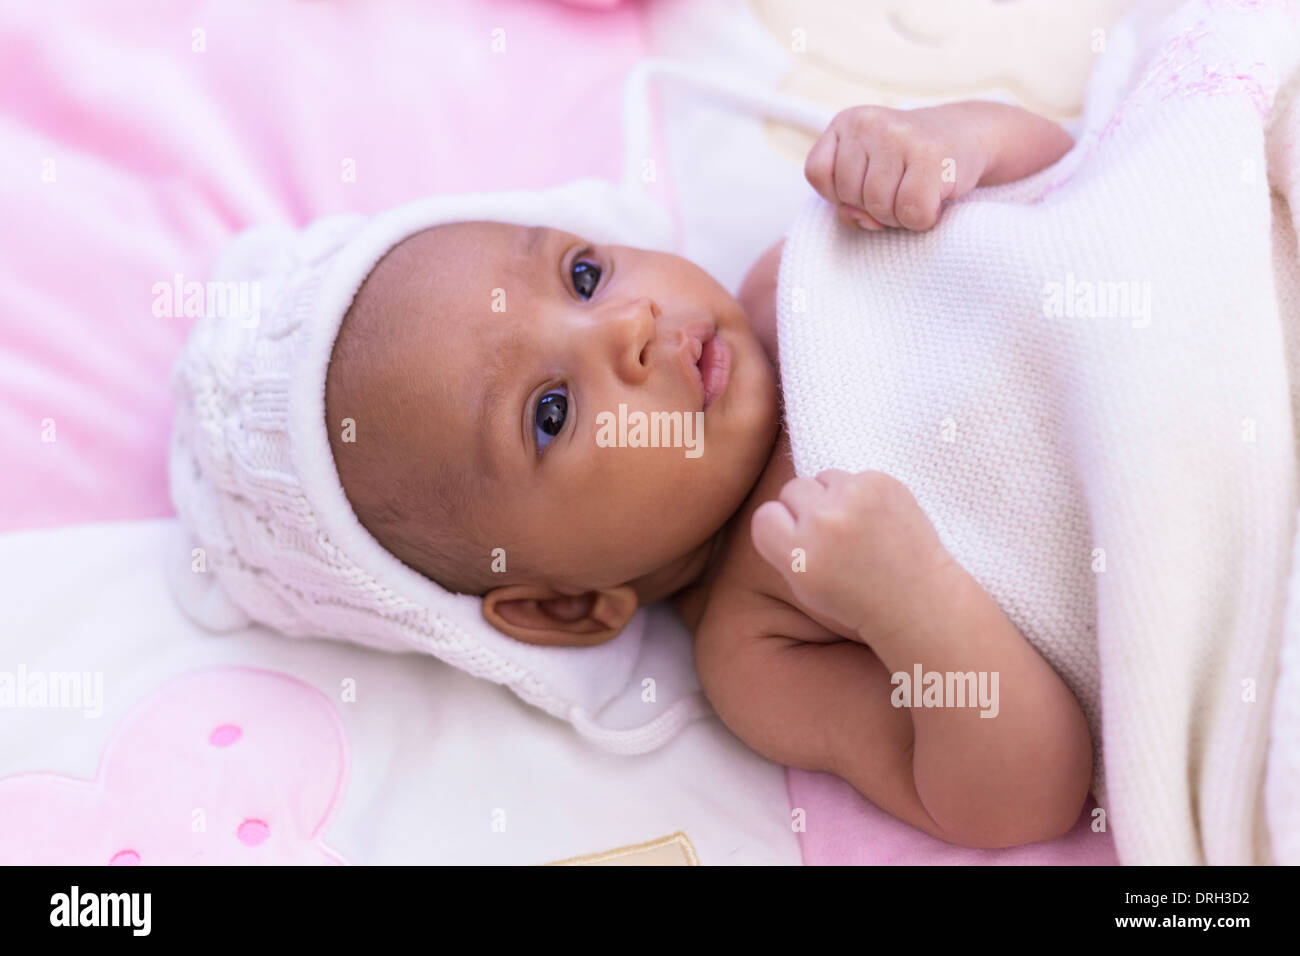 black african baby girl Stock Photo - Alamy